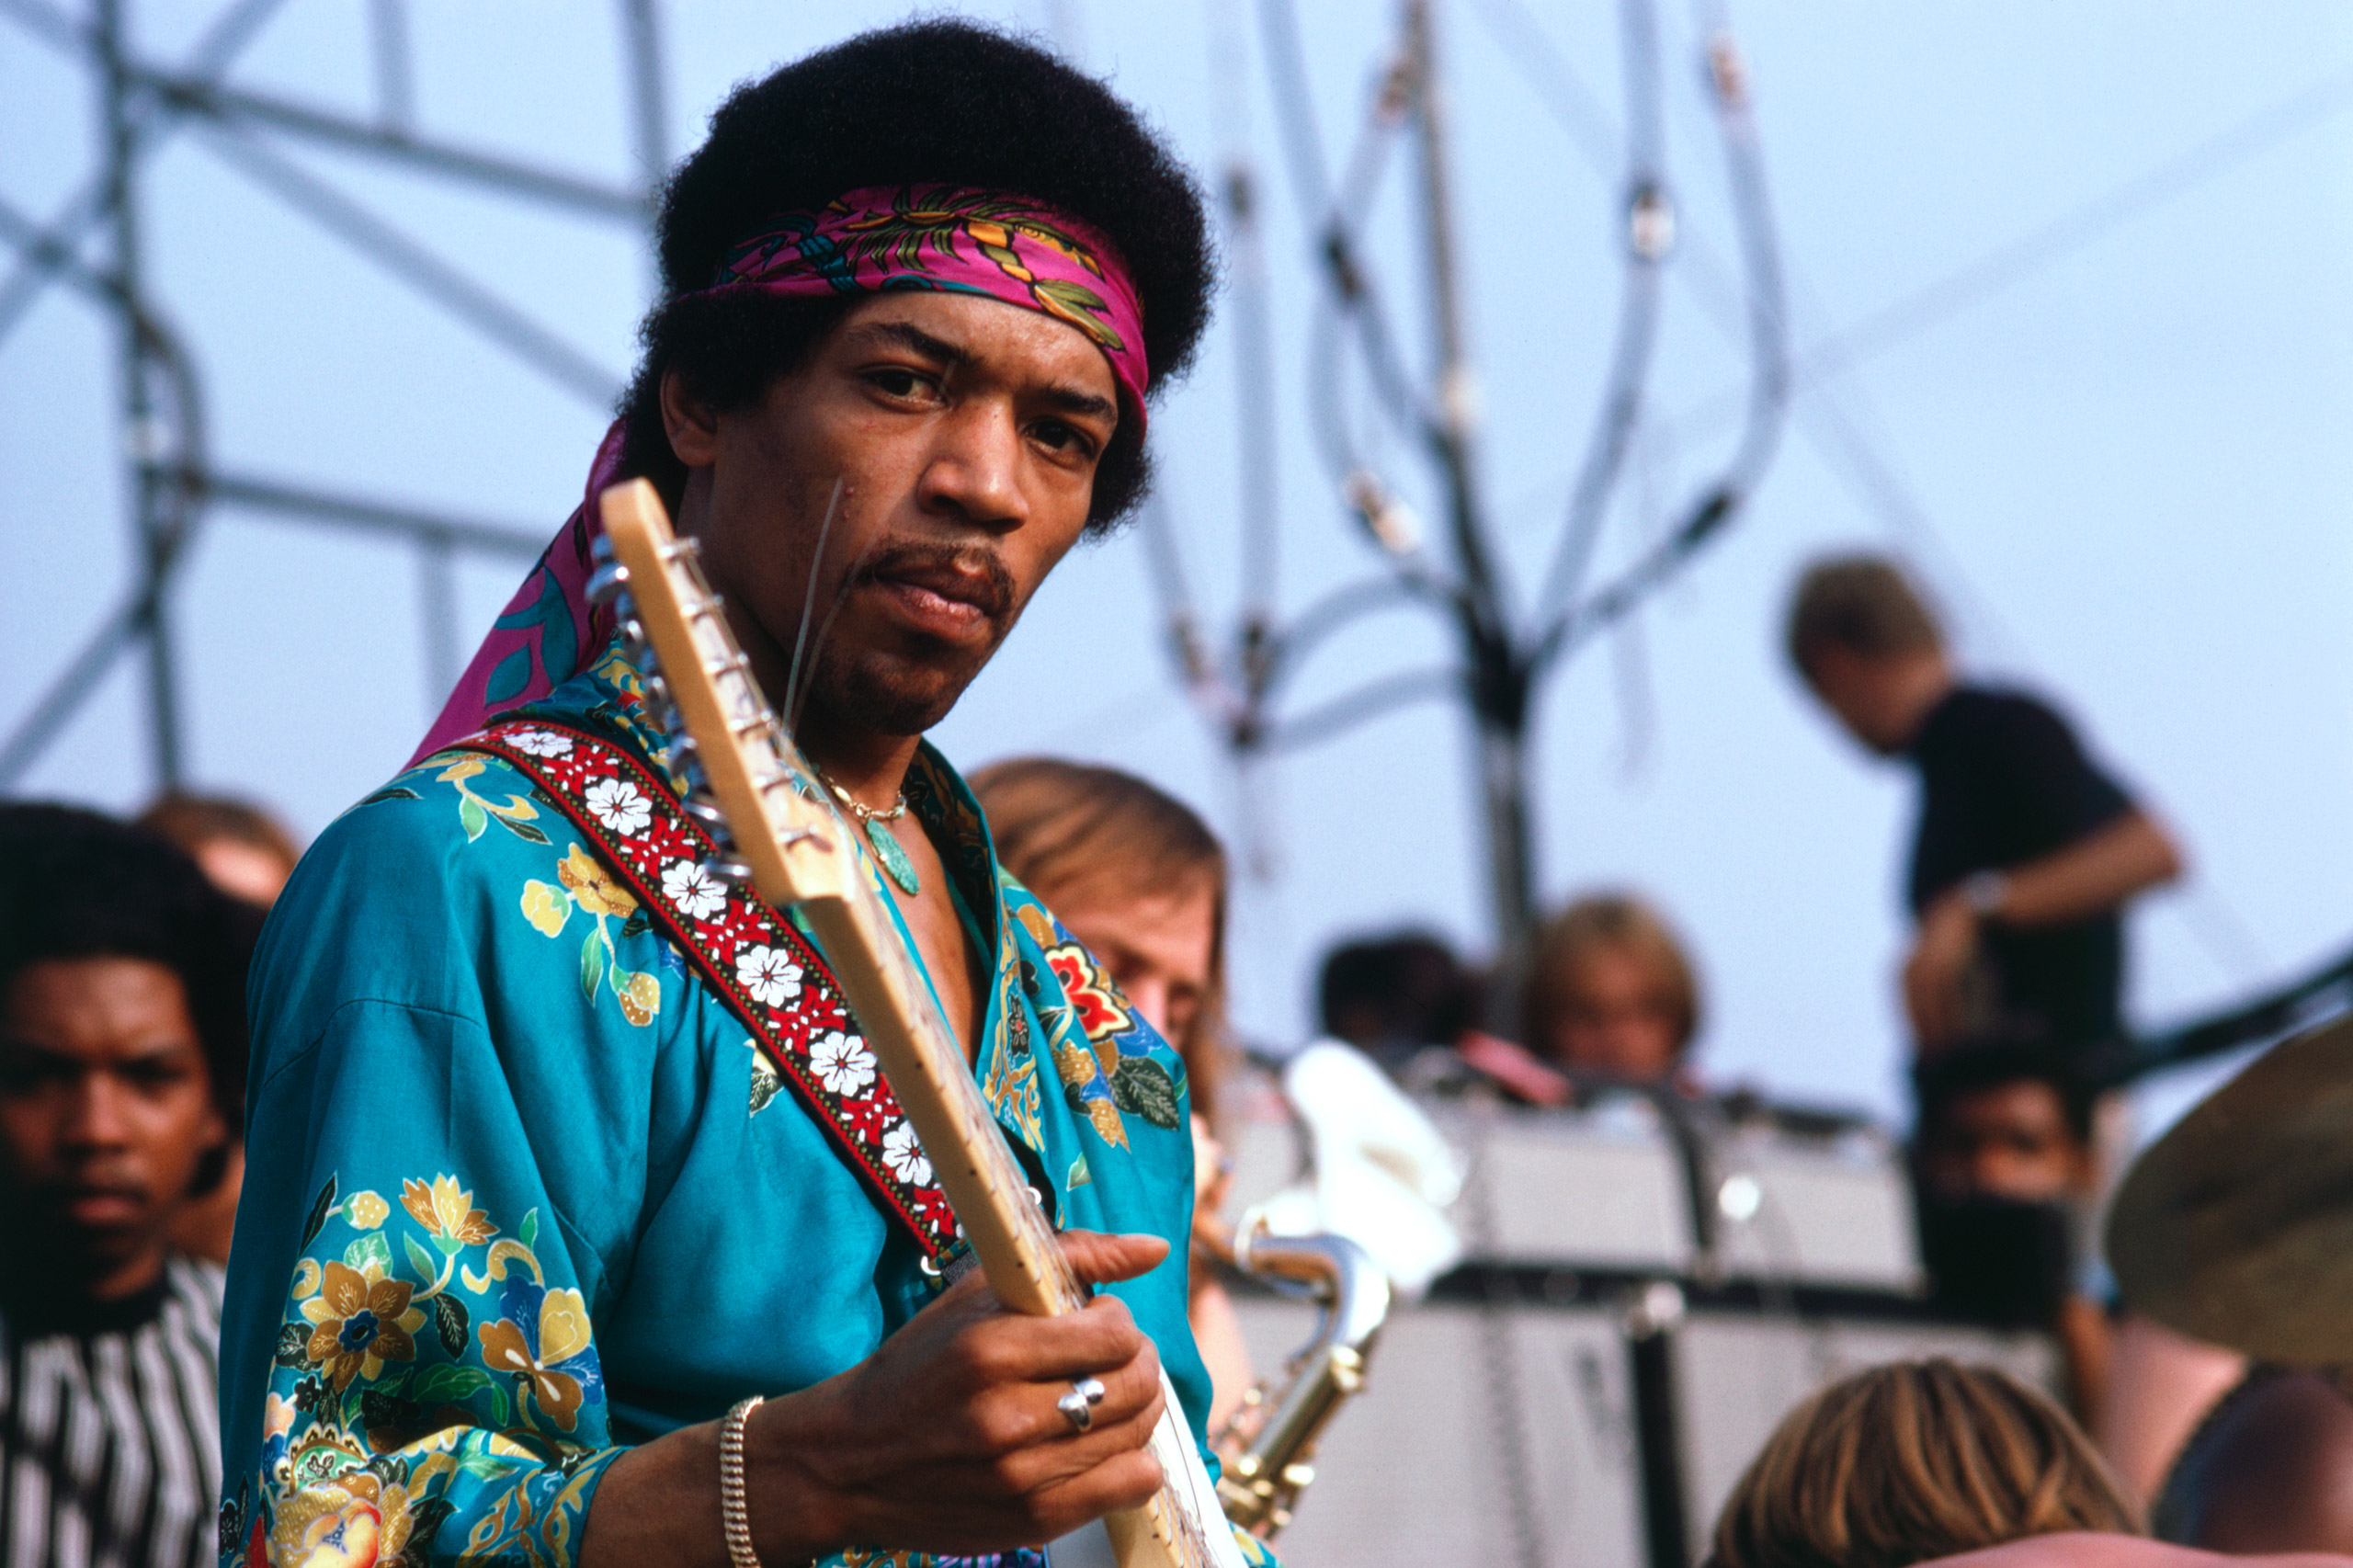 Jimi Hendrix on stage at the Newport Pop Festival, Northridge, California, June 22, 1969.